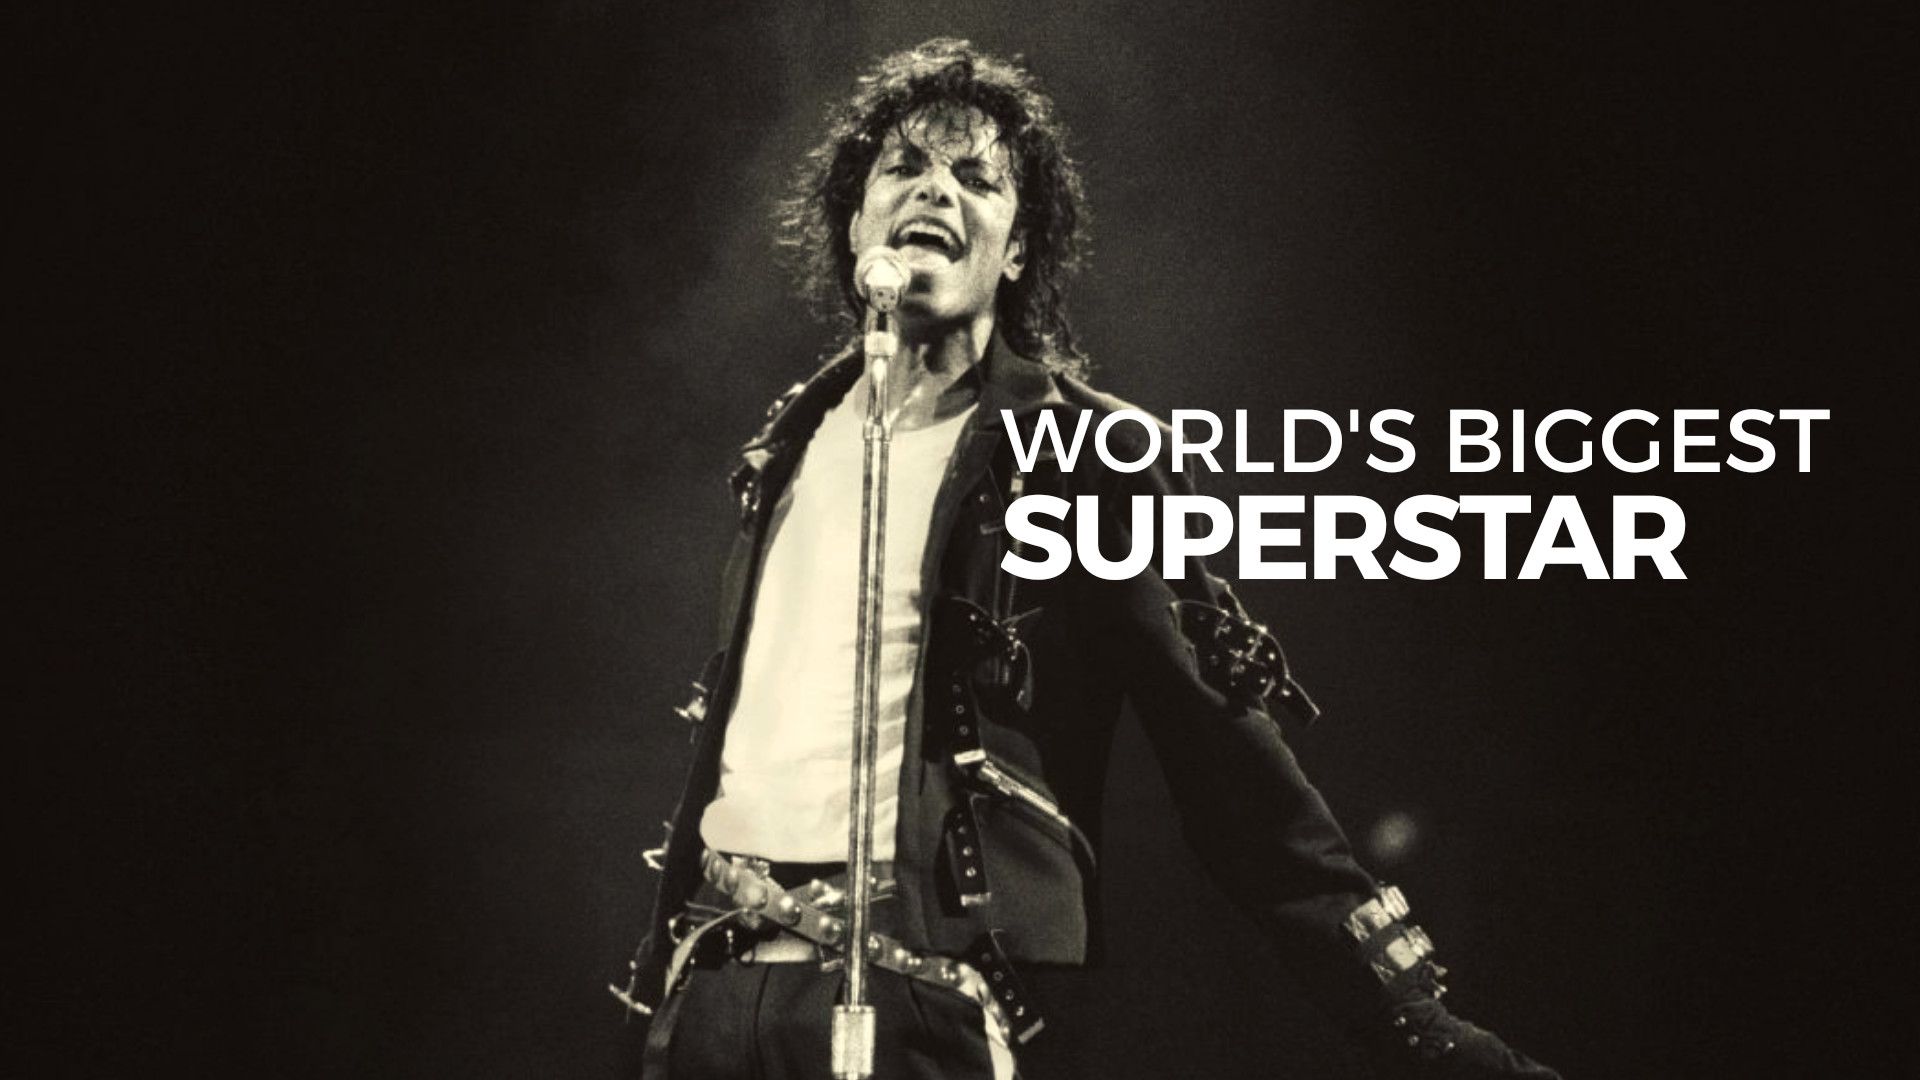 1920x Michael Jackson Image World S Biggest Superstar